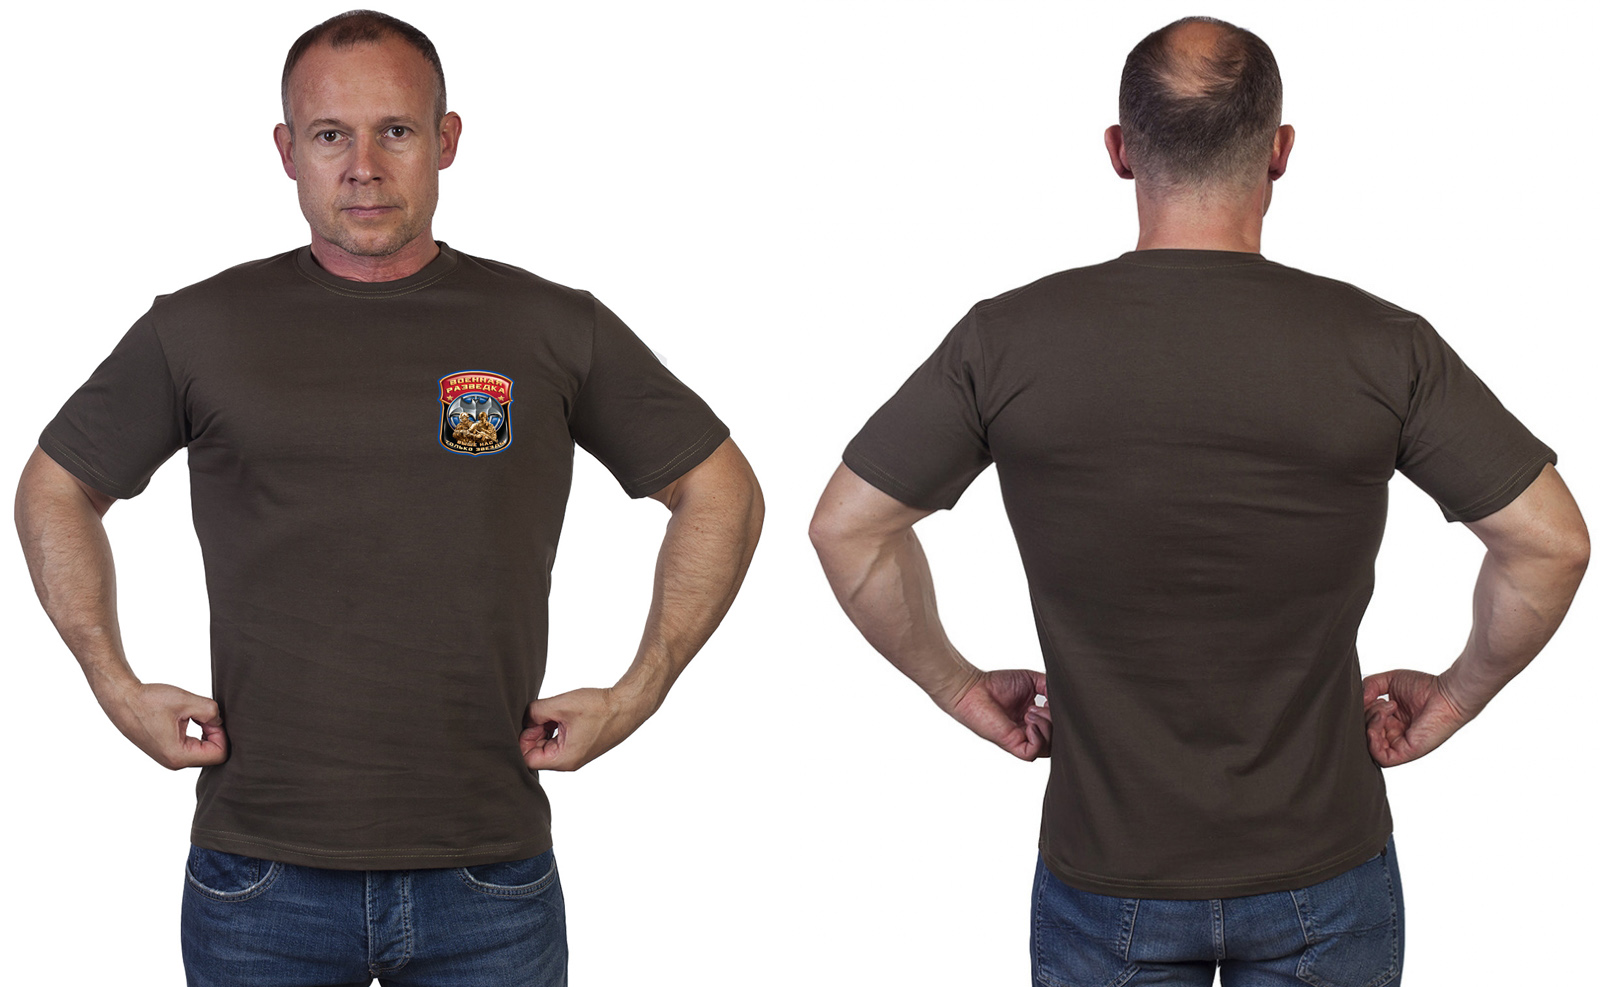 Хаки футболка для мужчин «Военная разведка» 